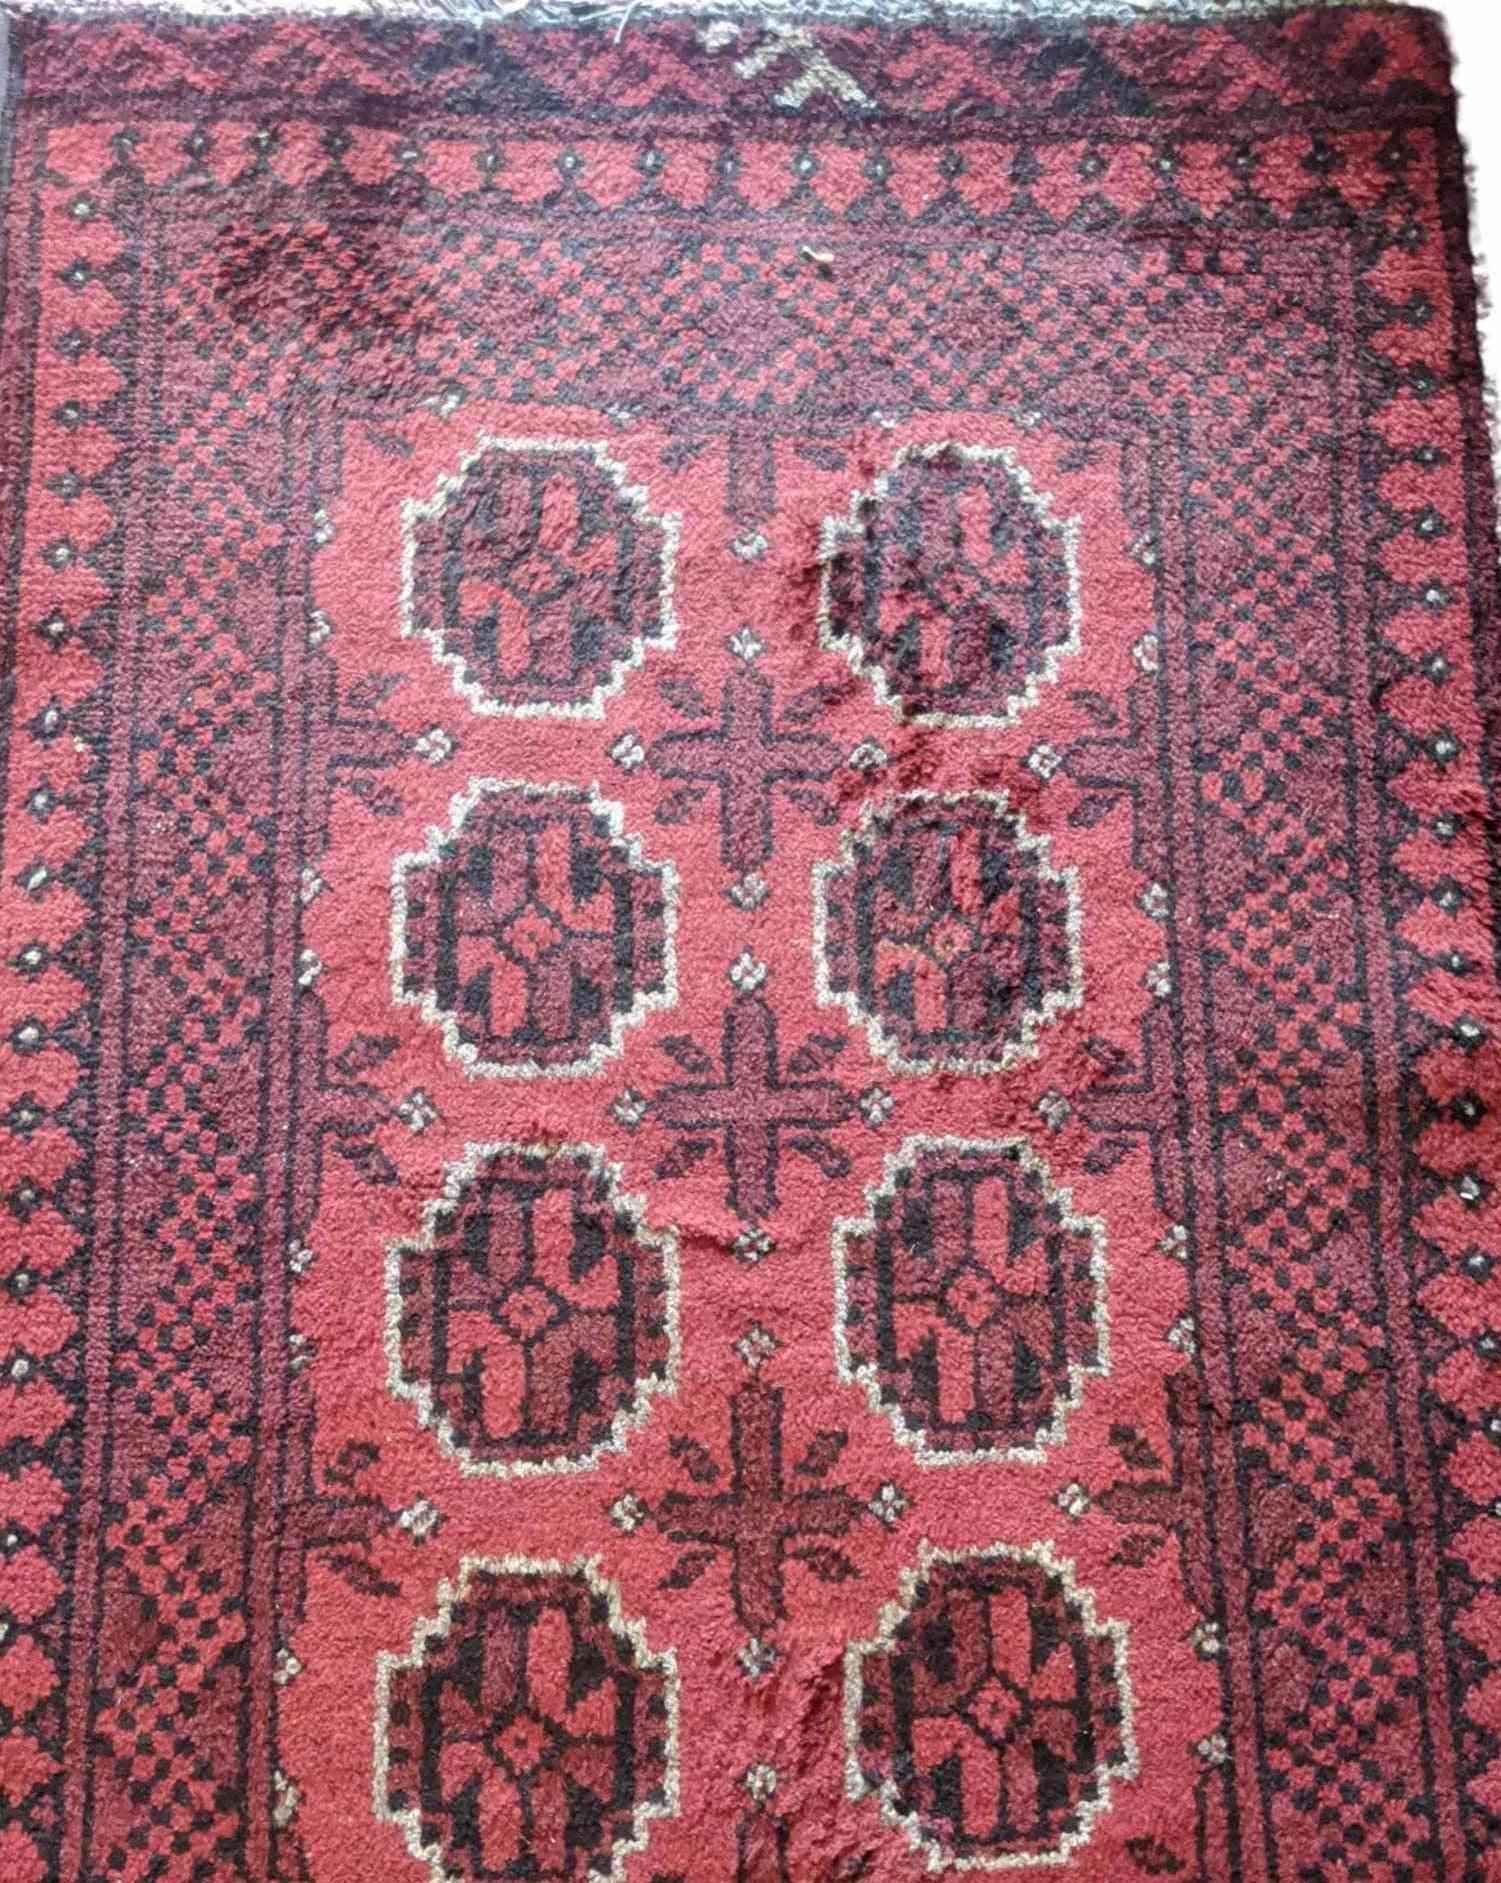 115 x 75 cm Afghan Red Tribal Red Rug - Rugmaster